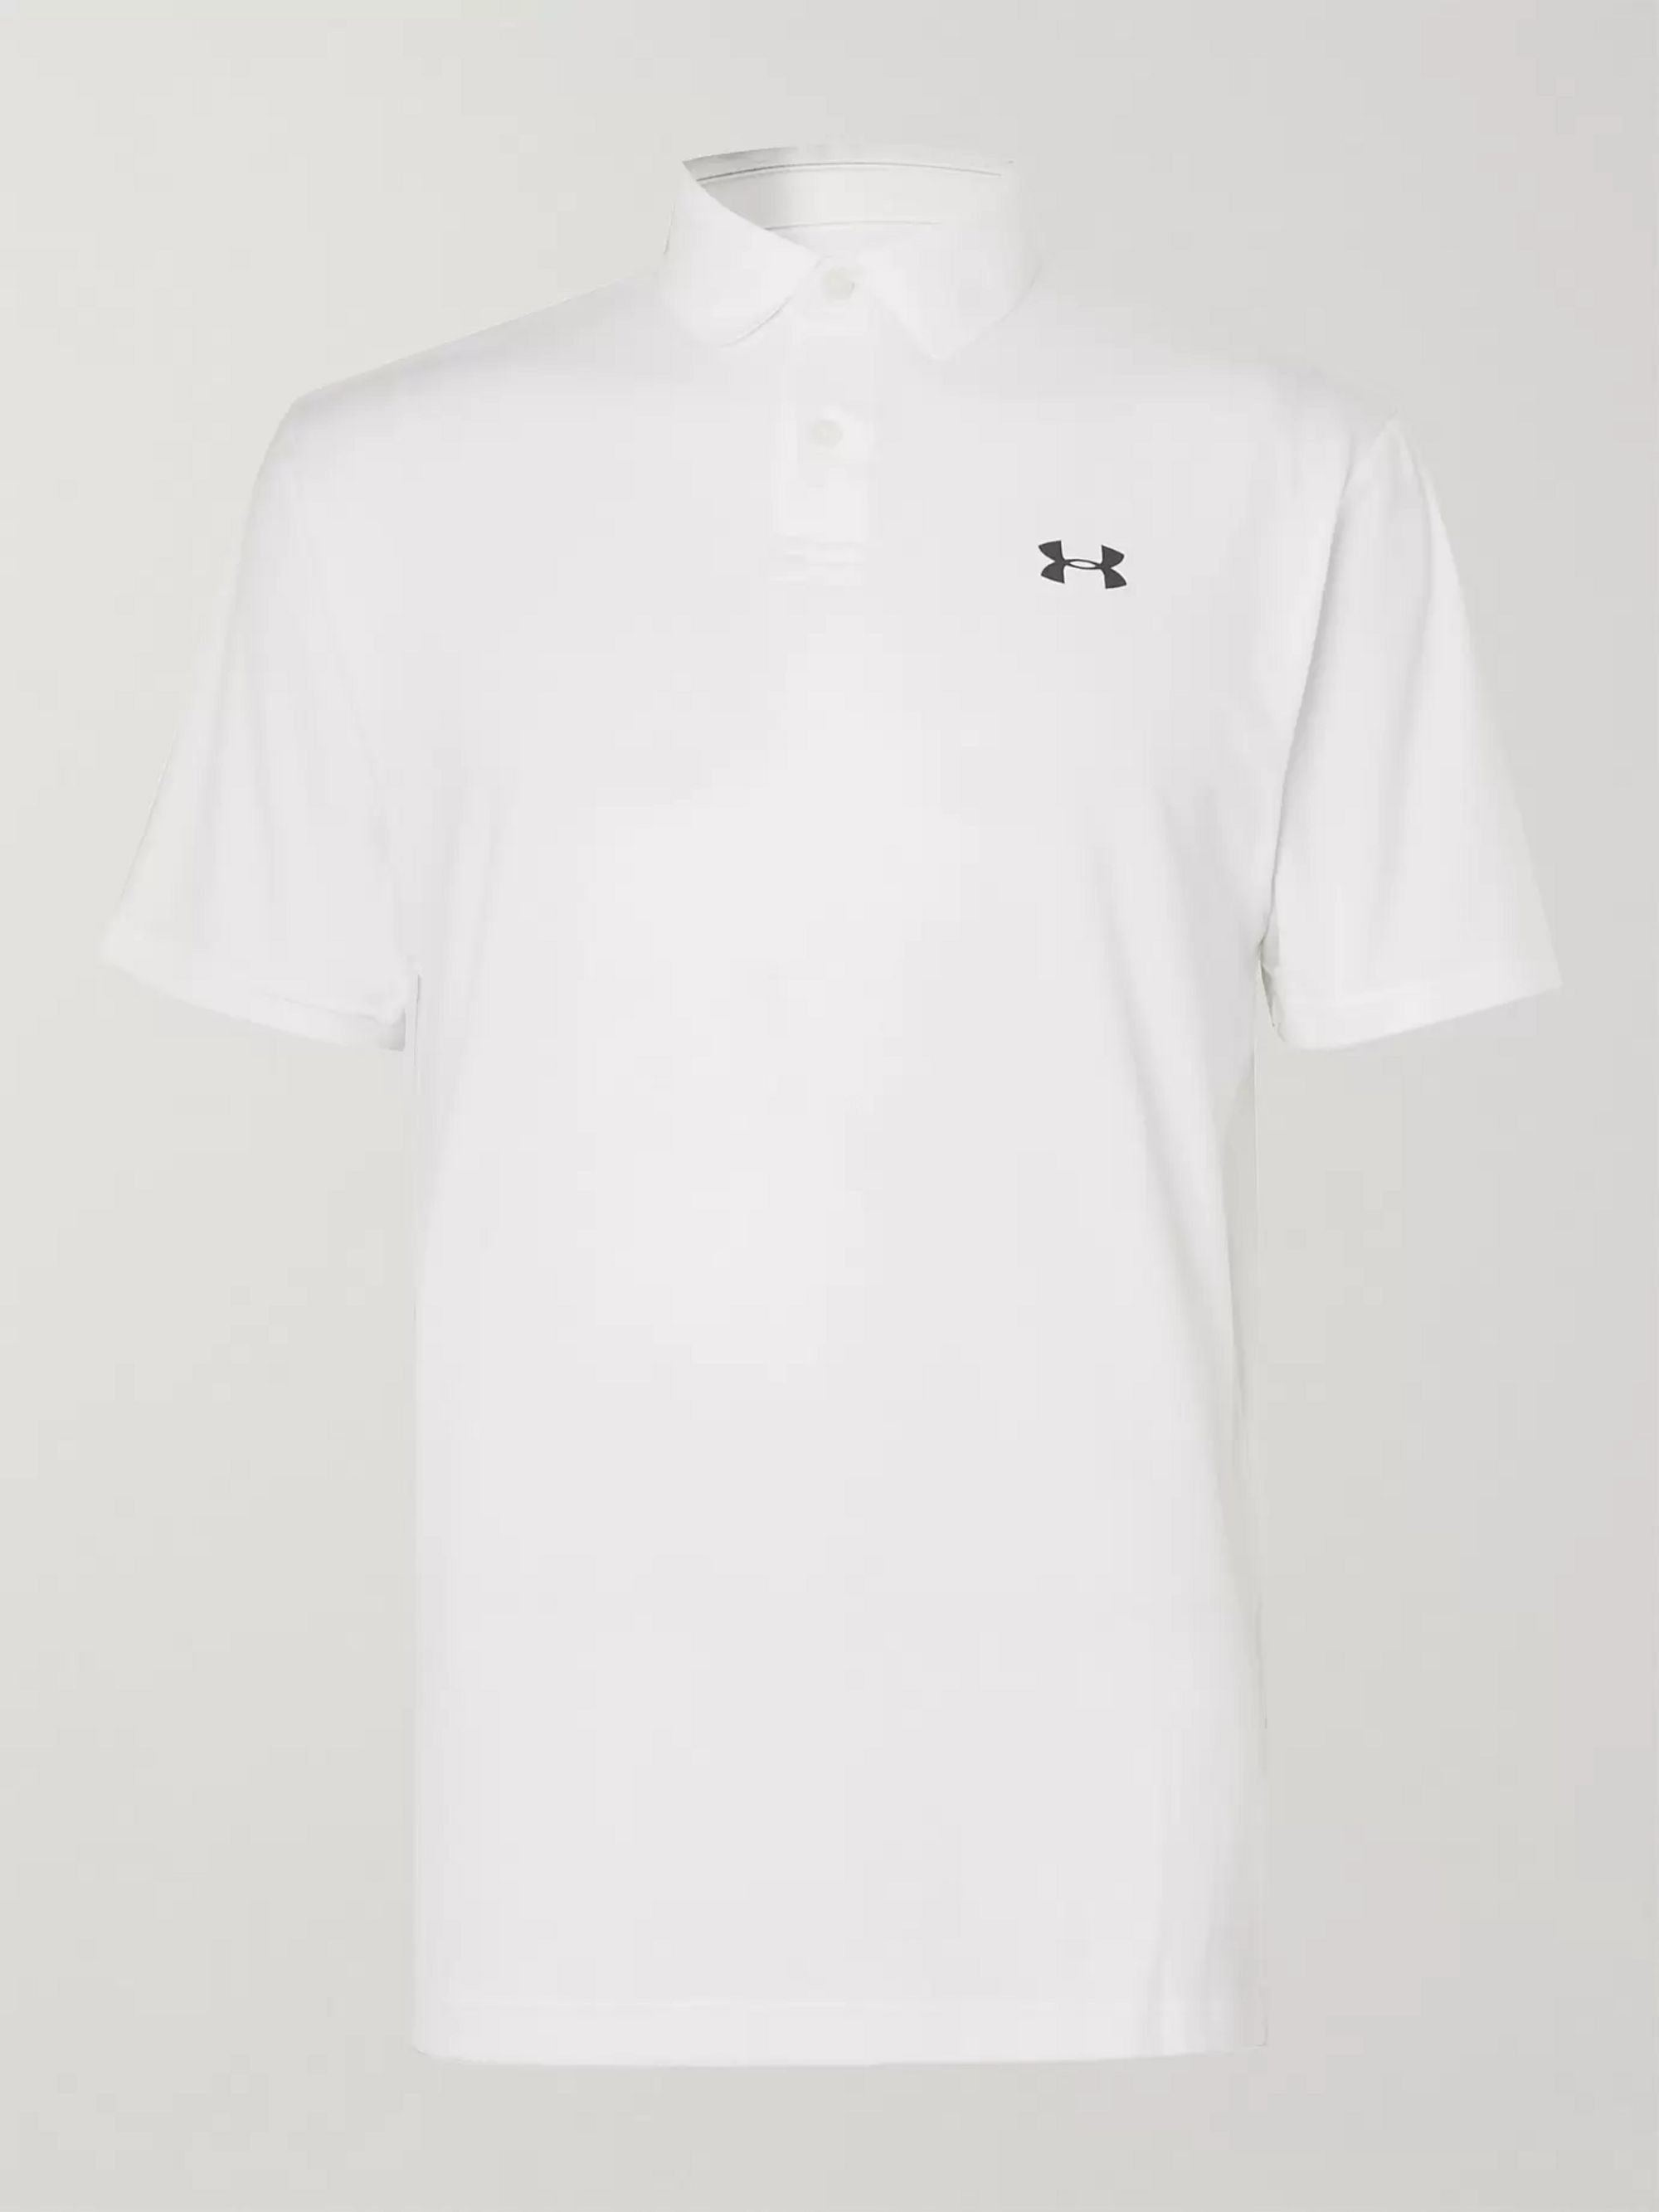 white under armour polo shirt